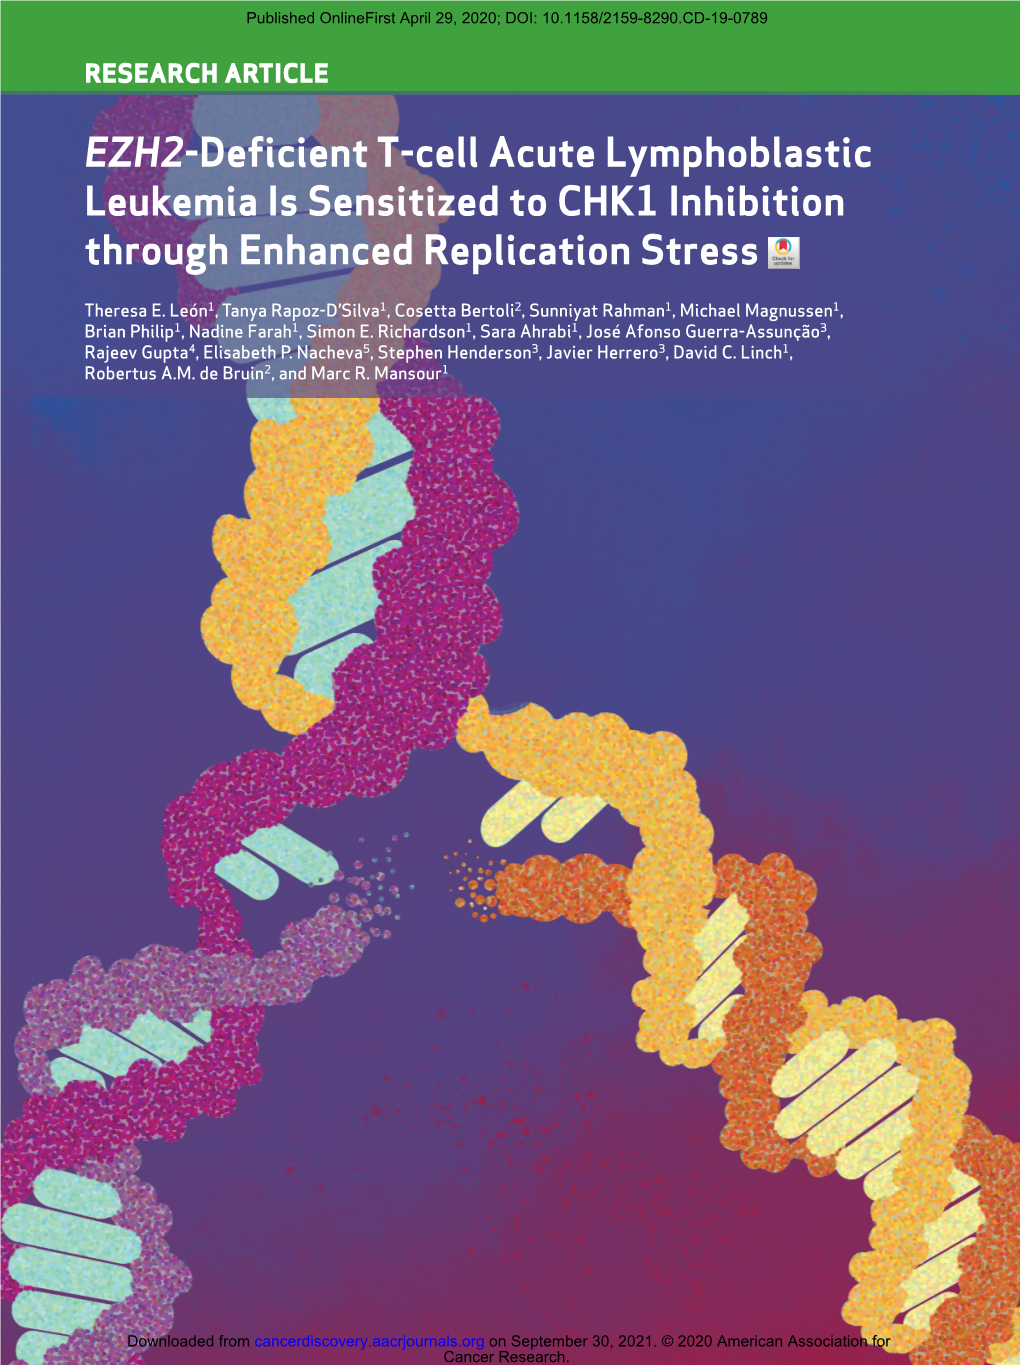 EZH2-Deficient T-Cell Acute Lymphoblastic Leukemia Is Sensitized to CHK1 Inhibition Through Enhanced Replication Stress